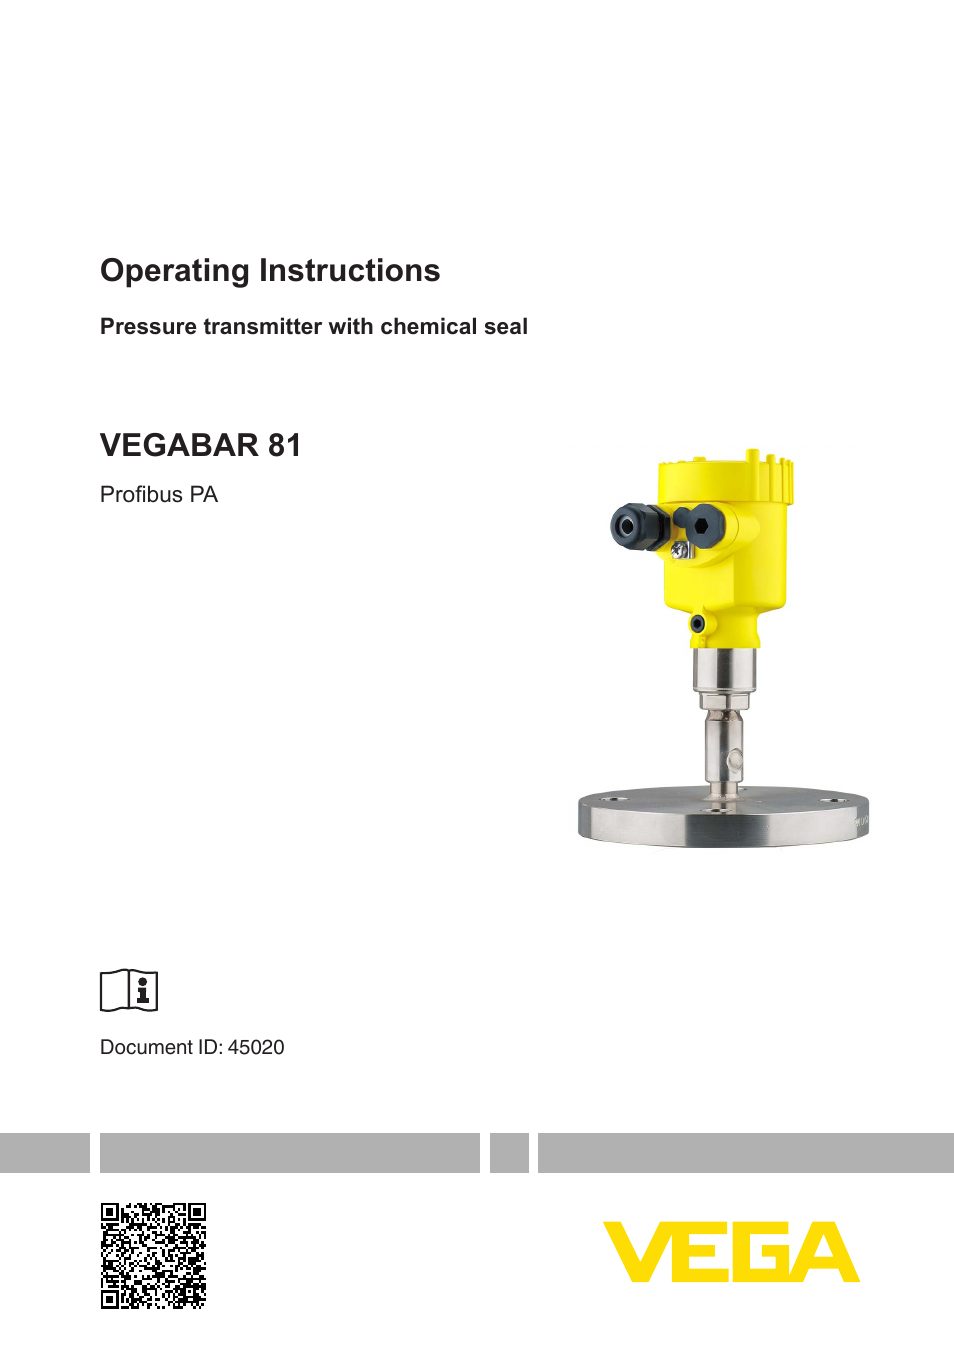 VEGABAR 81 Profibus PA - Operating Instructions